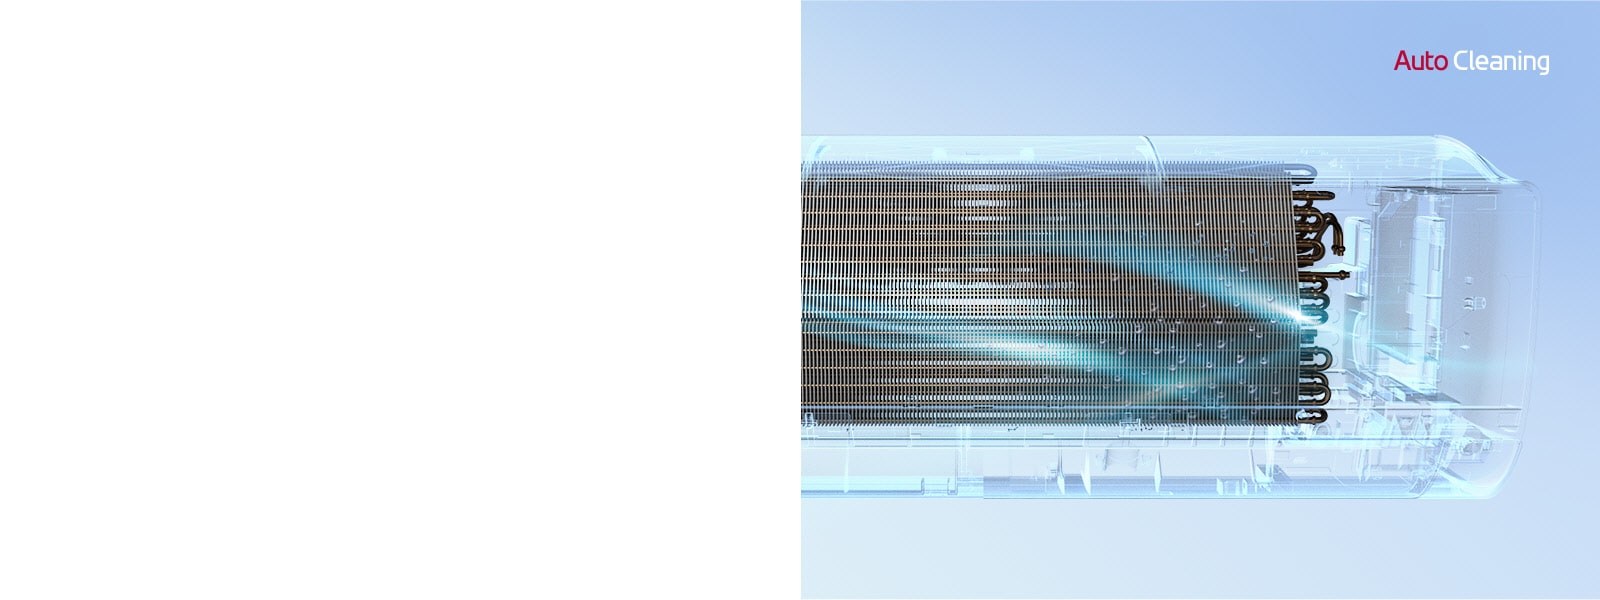 LG 空調的前視圖，其外殼纯透明，讓您可見機器內部工作原理。機器正在運轉，然後自動清潔功能的藍光亮起，並利用藍光清潔整台機器。右下角顯示 AutoCleaning 標誌。